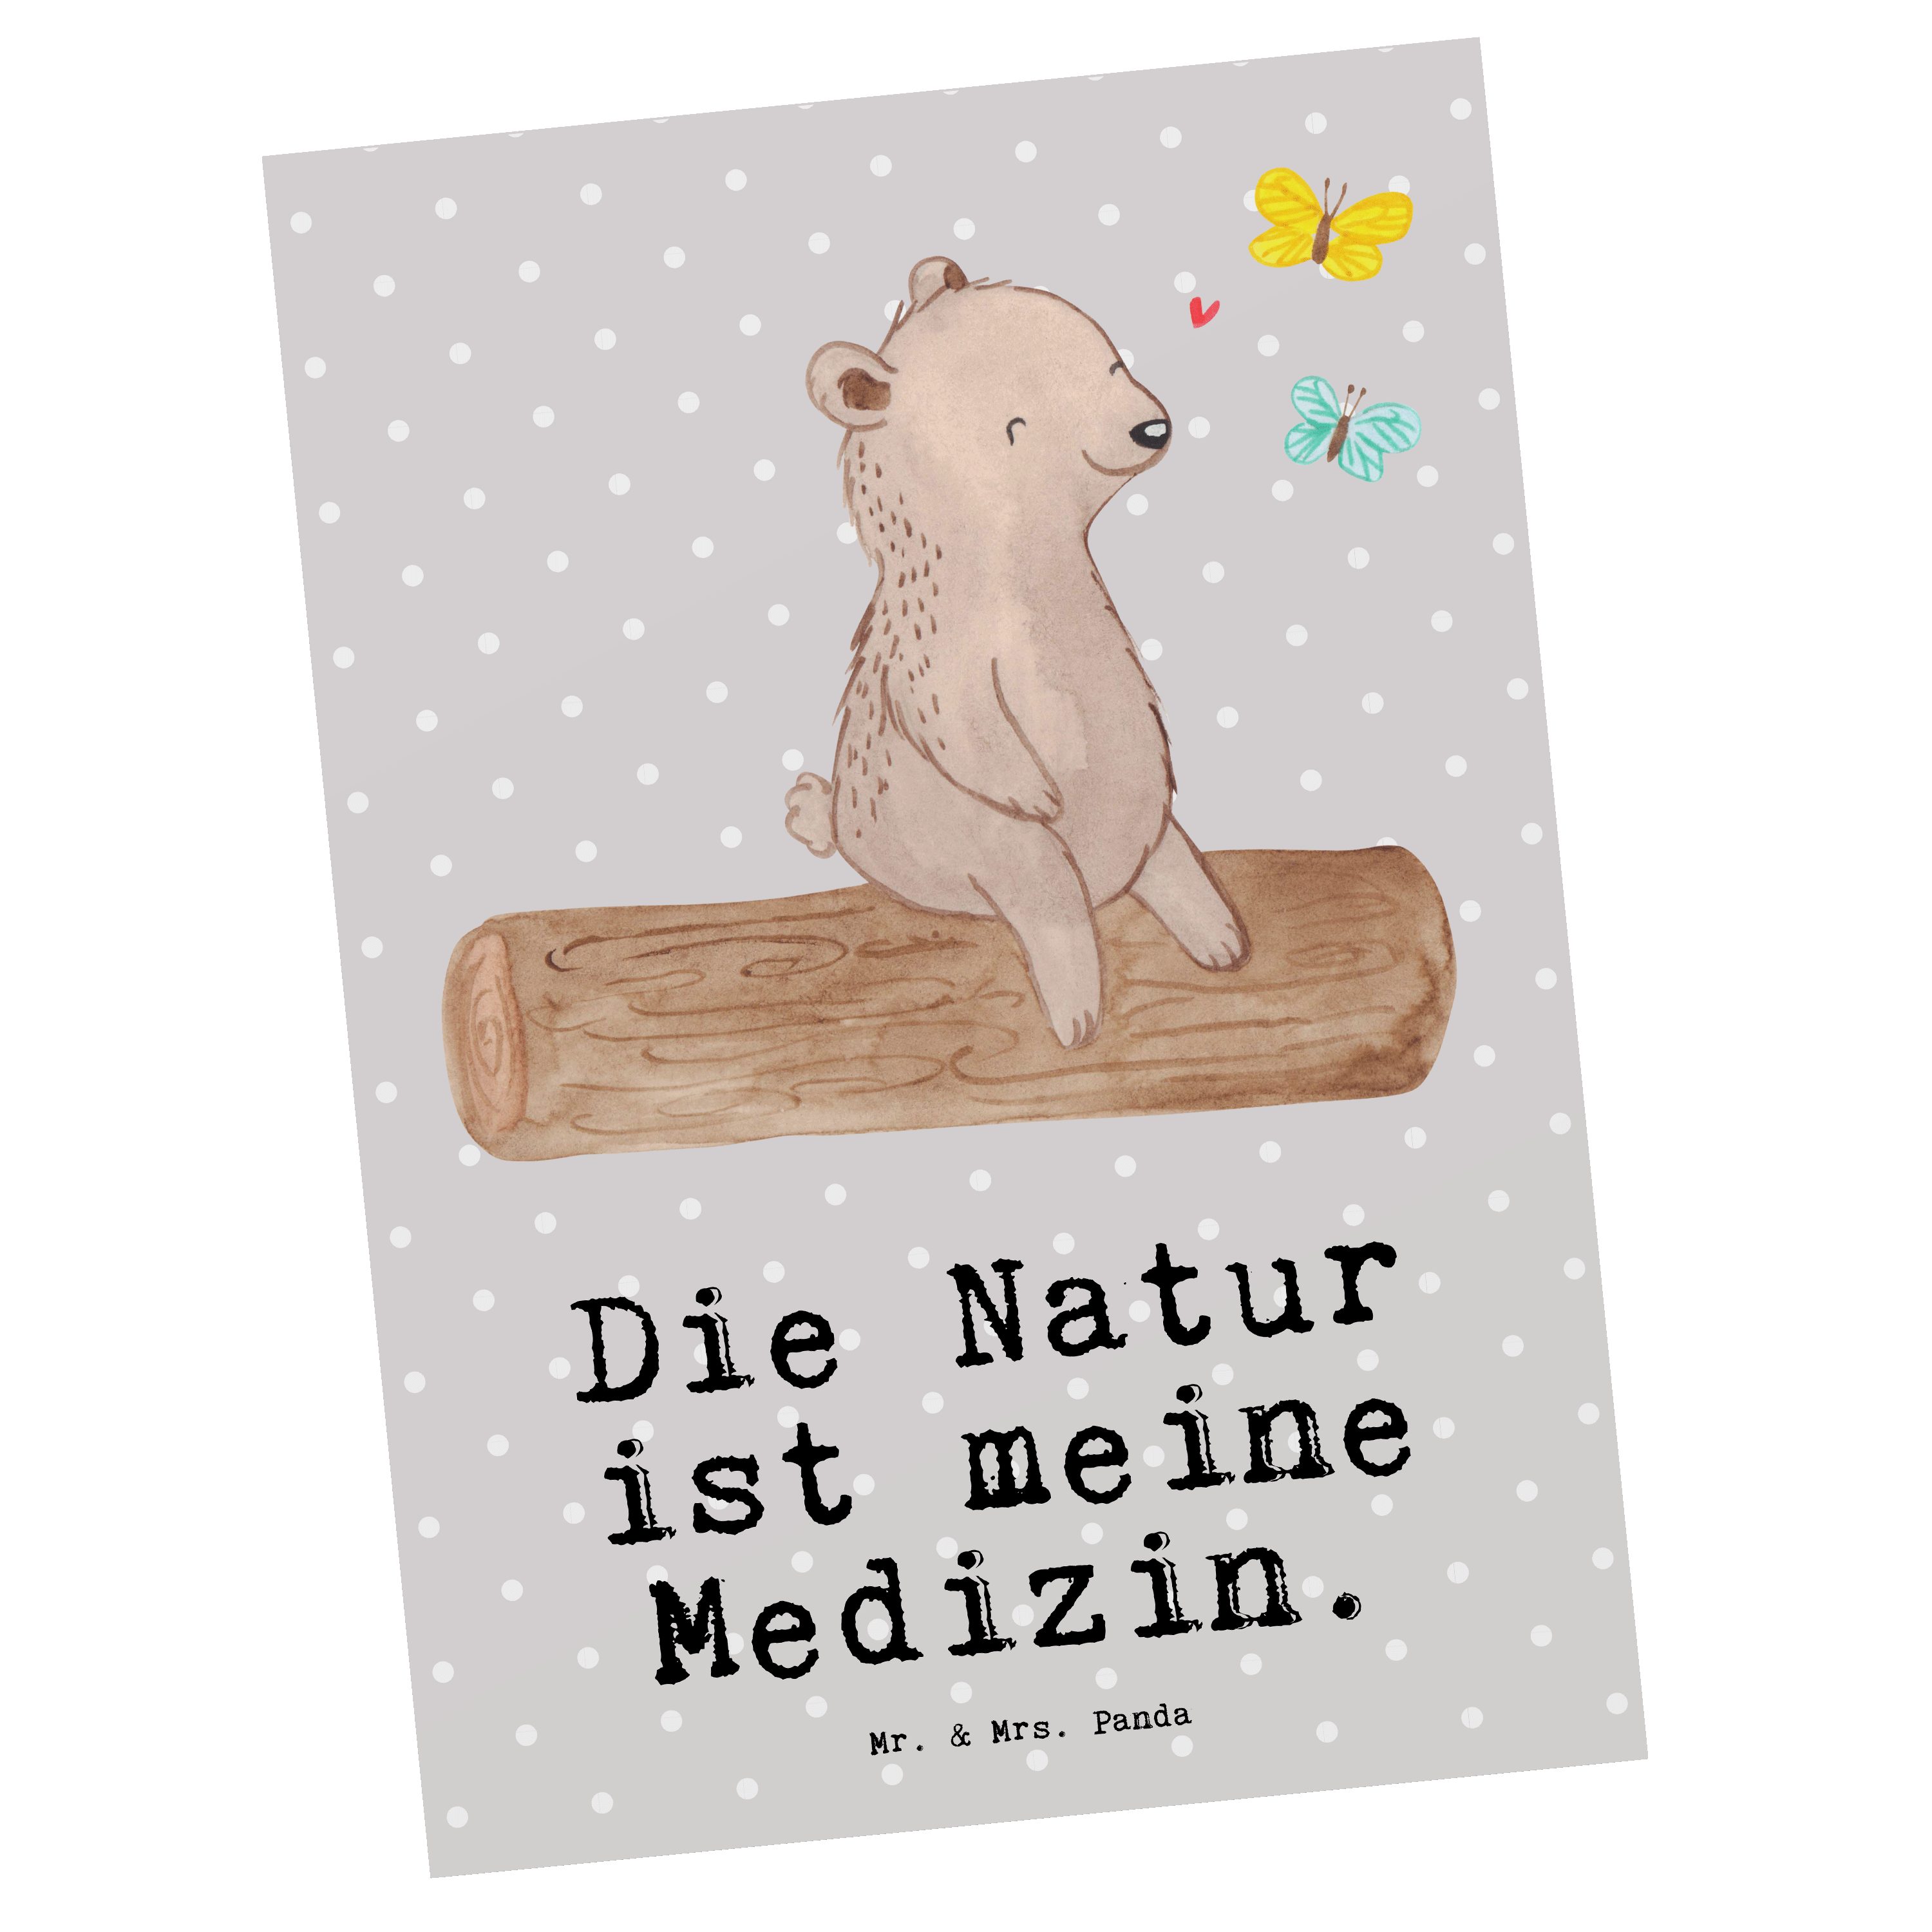 Mr. & Mrs. Panda Postkarte Bär Naturliebhaber Medizin - Grau Pastell - Geschenk, Grußkarte, Gebu